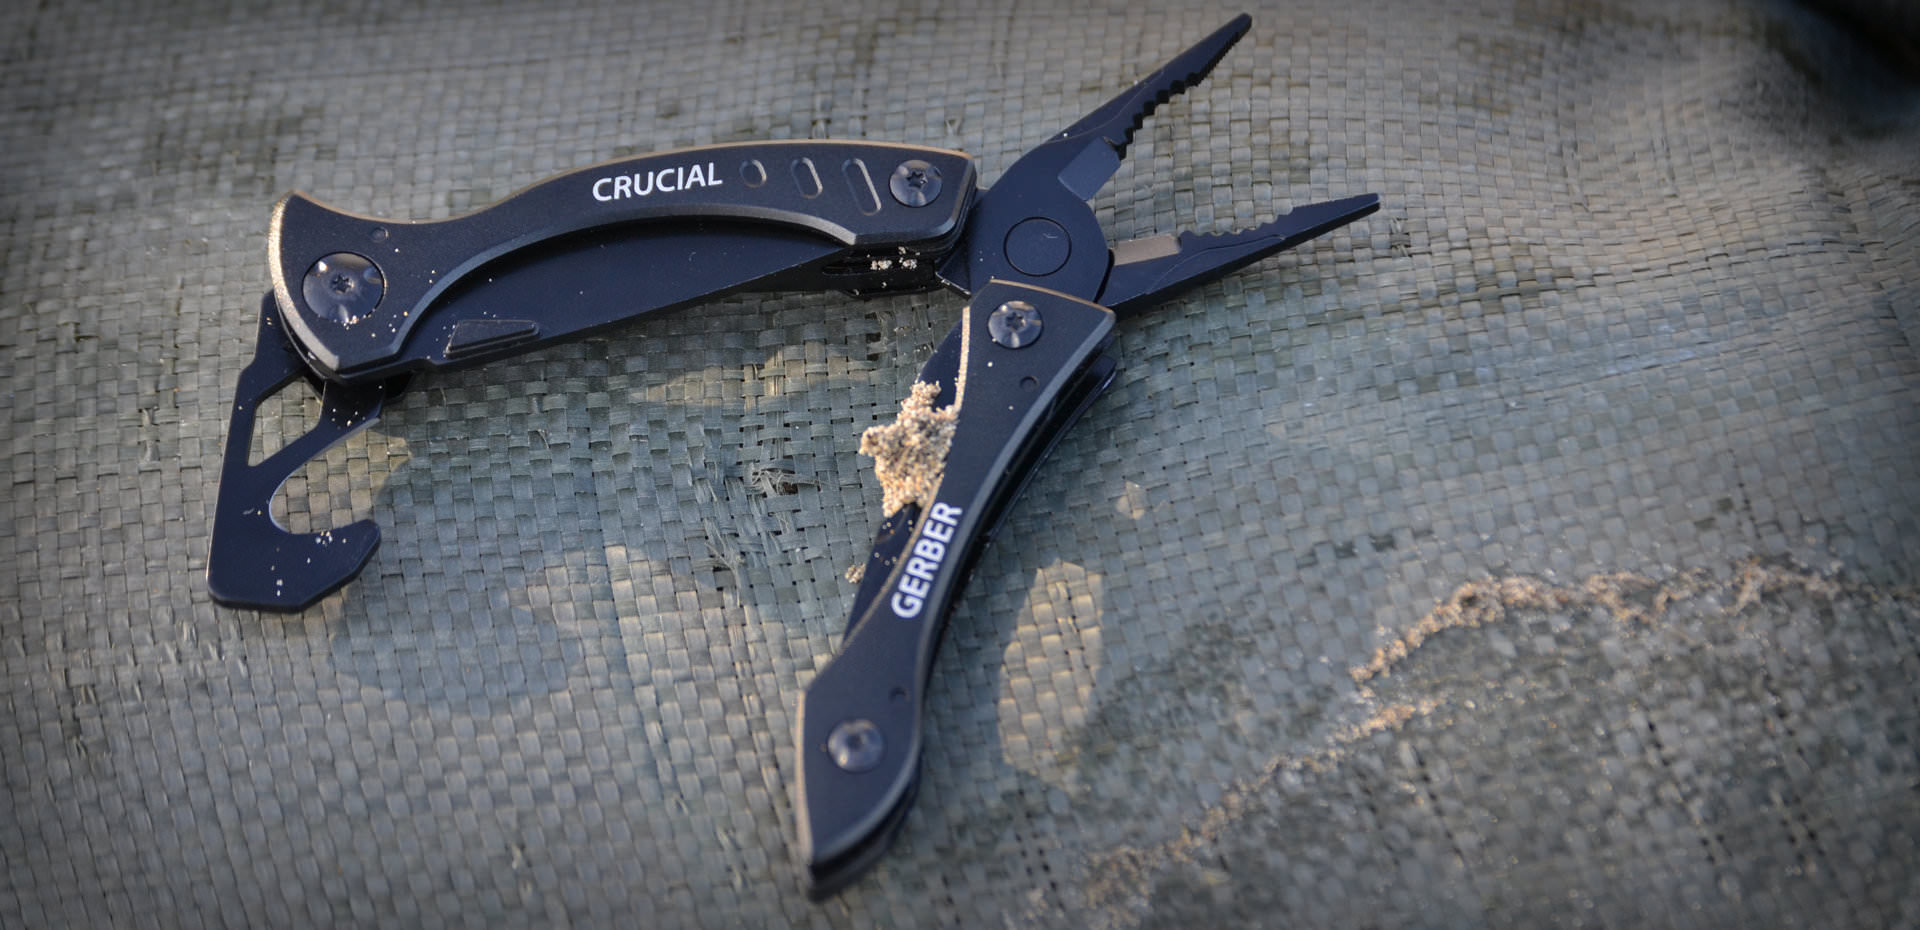 kim-da-nang-gerber-crucial-multi-tool-with-strap-cutter-04